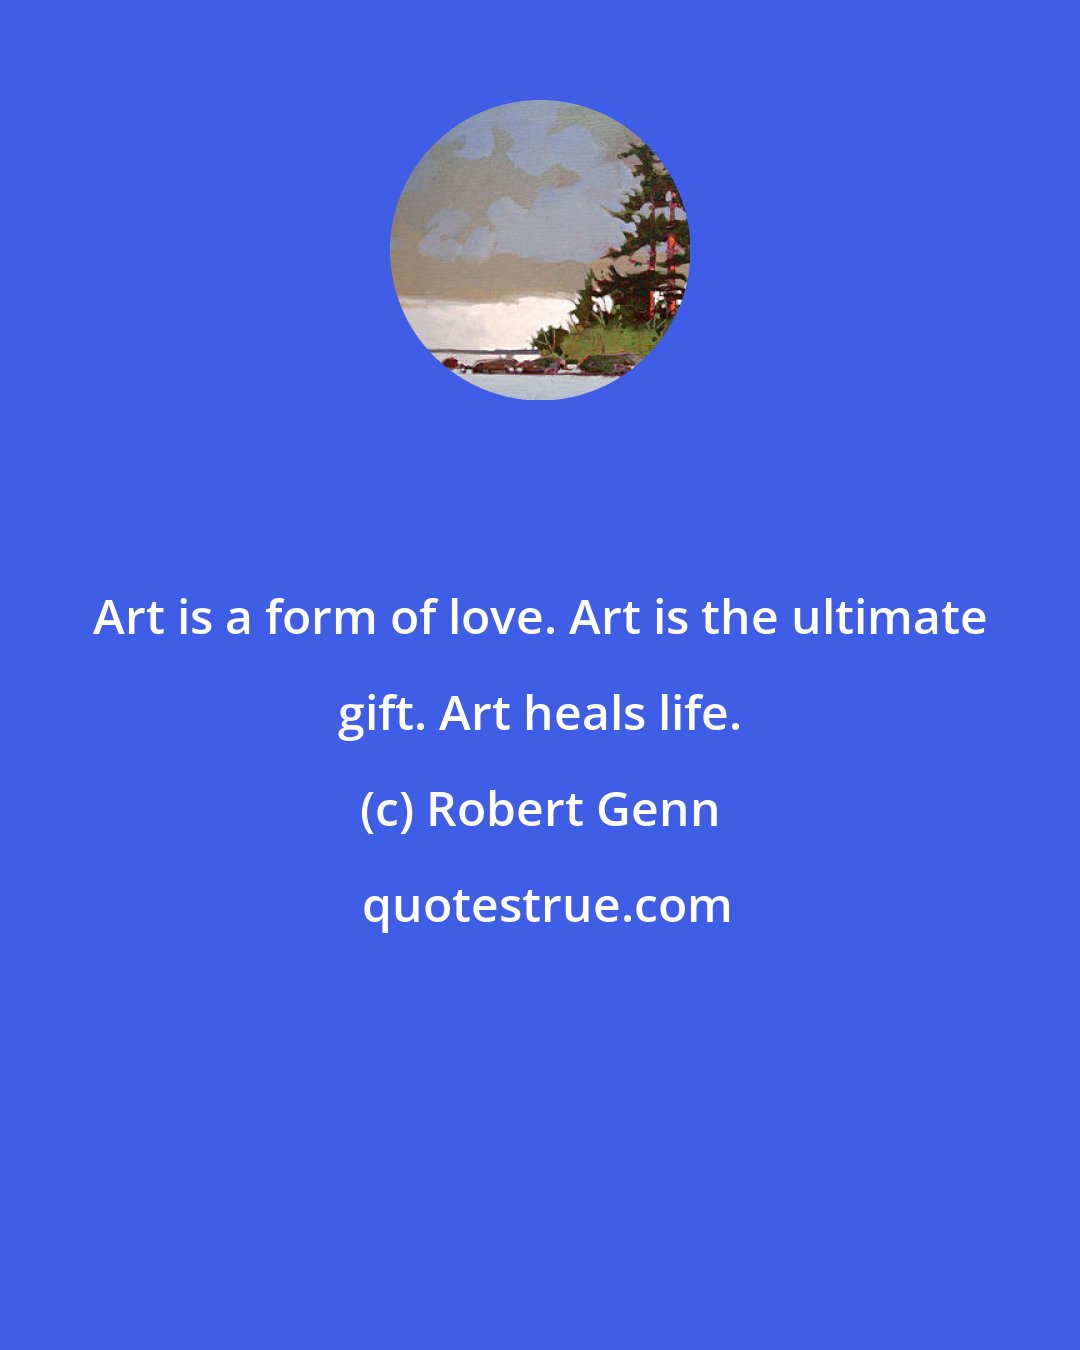 Robert Genn: Art is a form of love. Art is the ultimate gift. Art heals life.